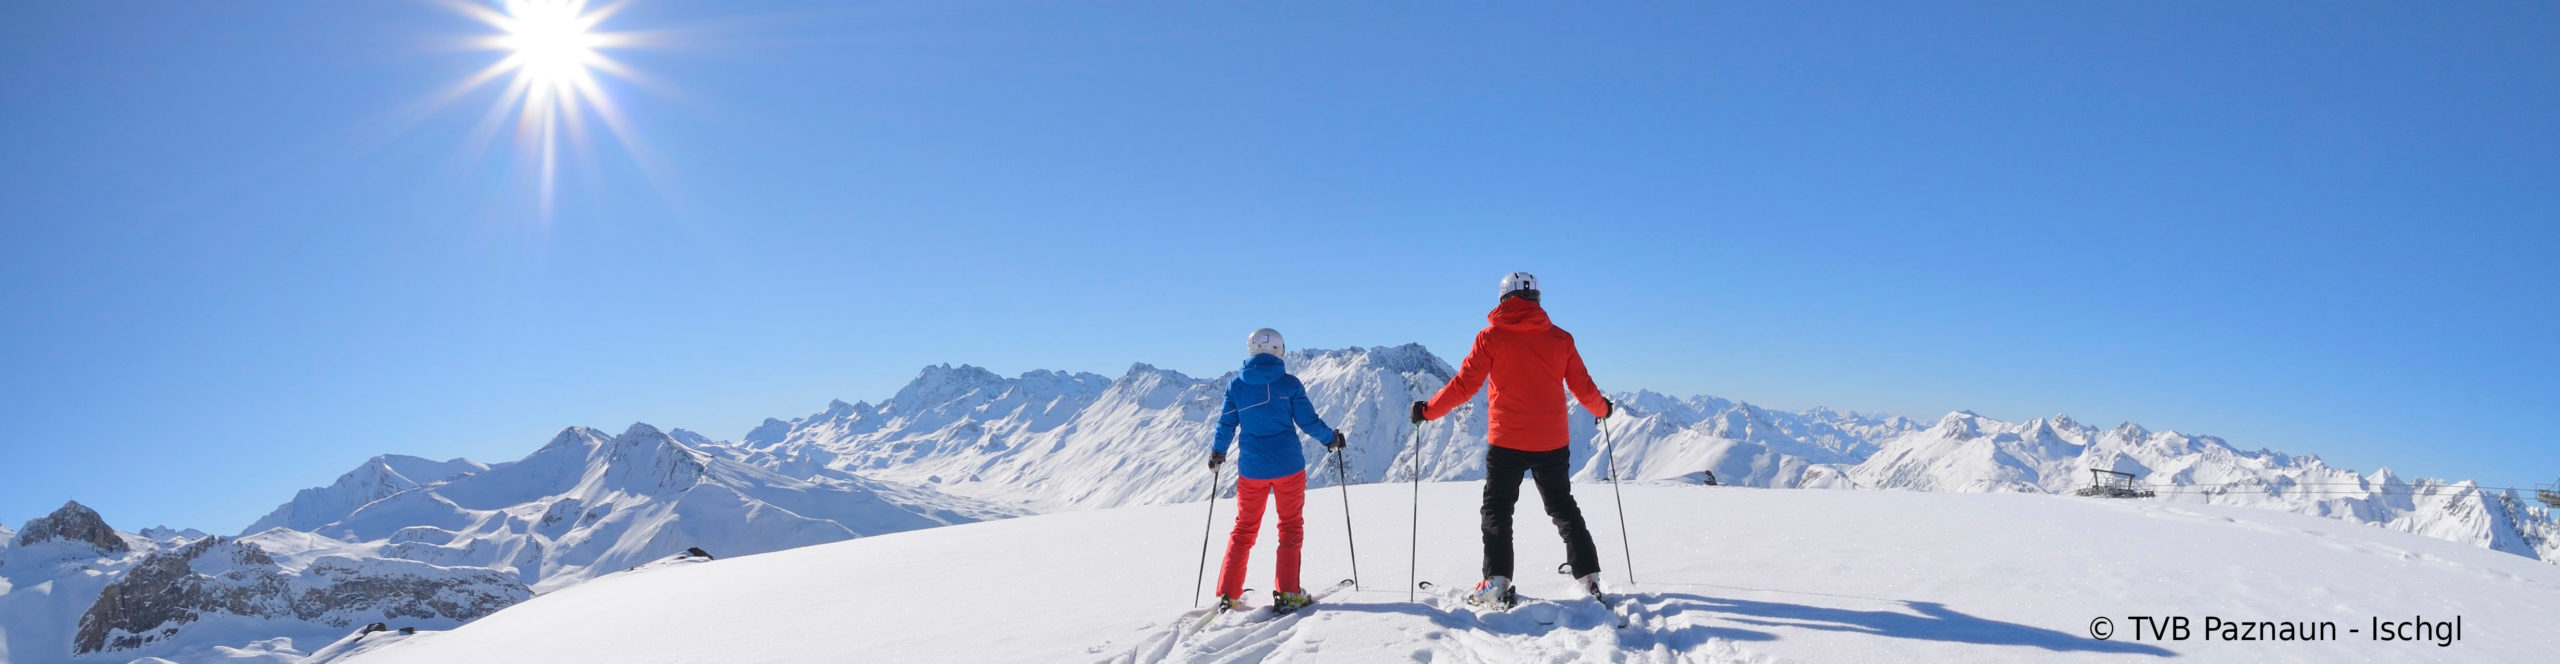 ISCHGL Opening – Skiwochenende – 3 Sterne Hotel nah an Ischgl- ab Freitag Nachmittag 